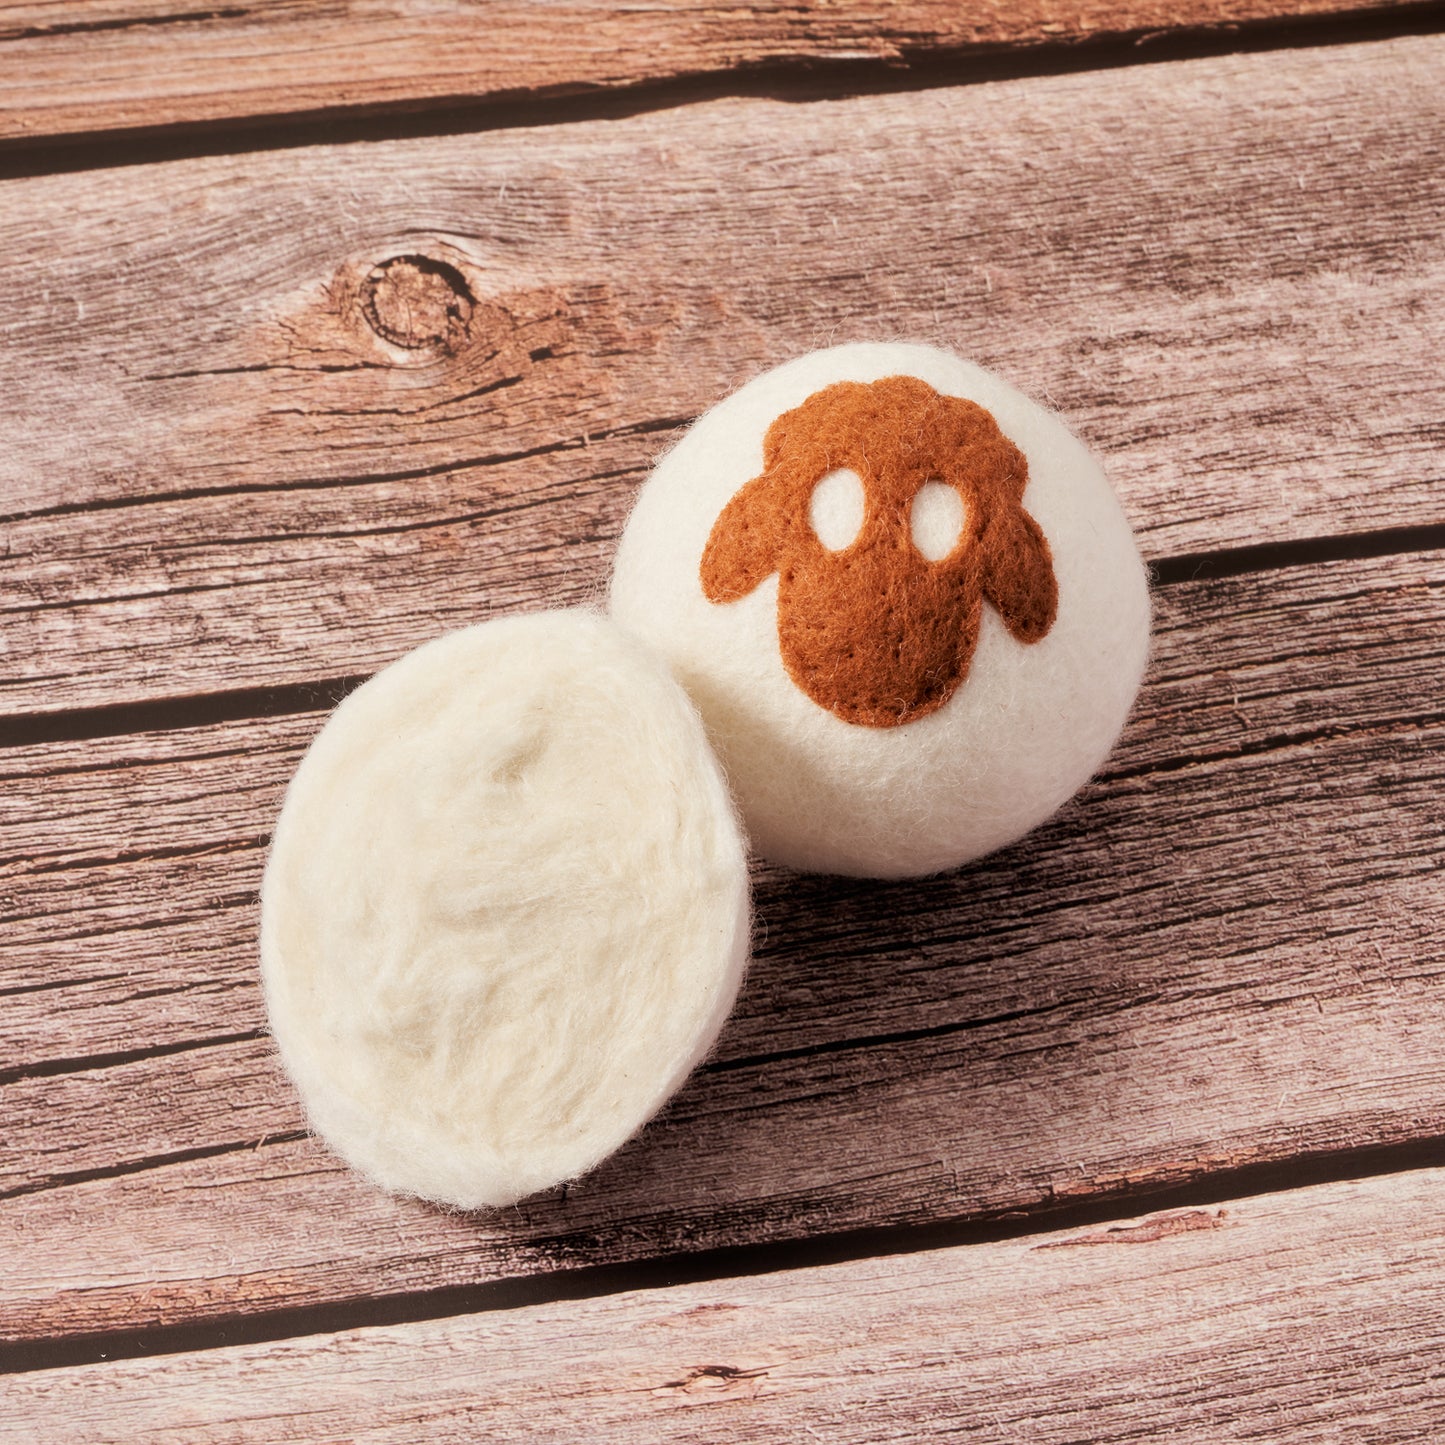 Sheep face dryer ball cut in half